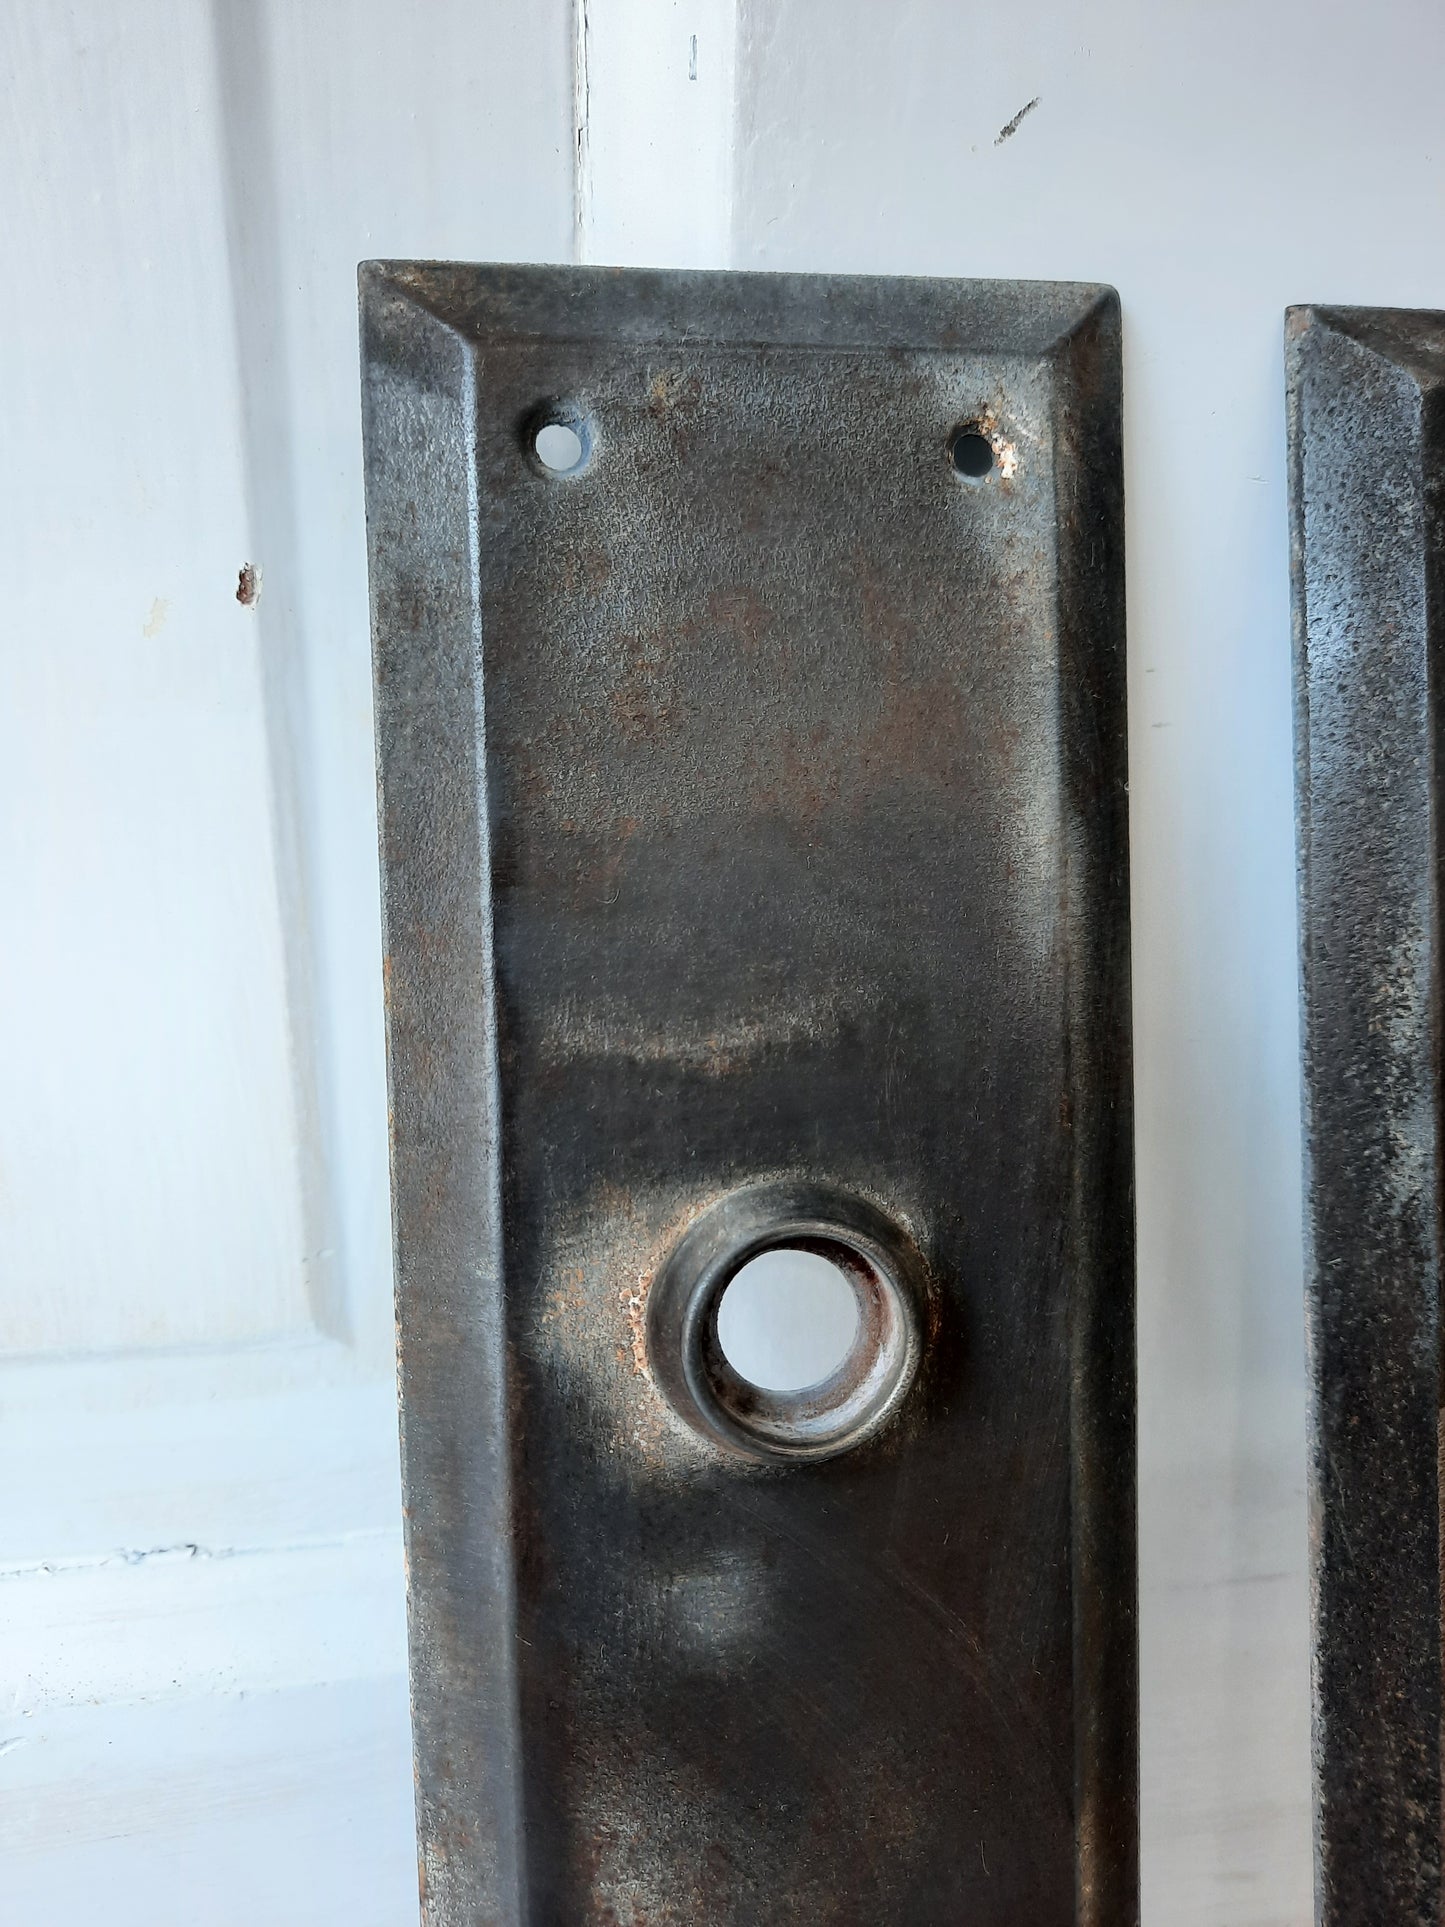 Pair of Large, Plain Antique Door Knob Backplates, Vintage Steel Doorknob Escutcheon Plates